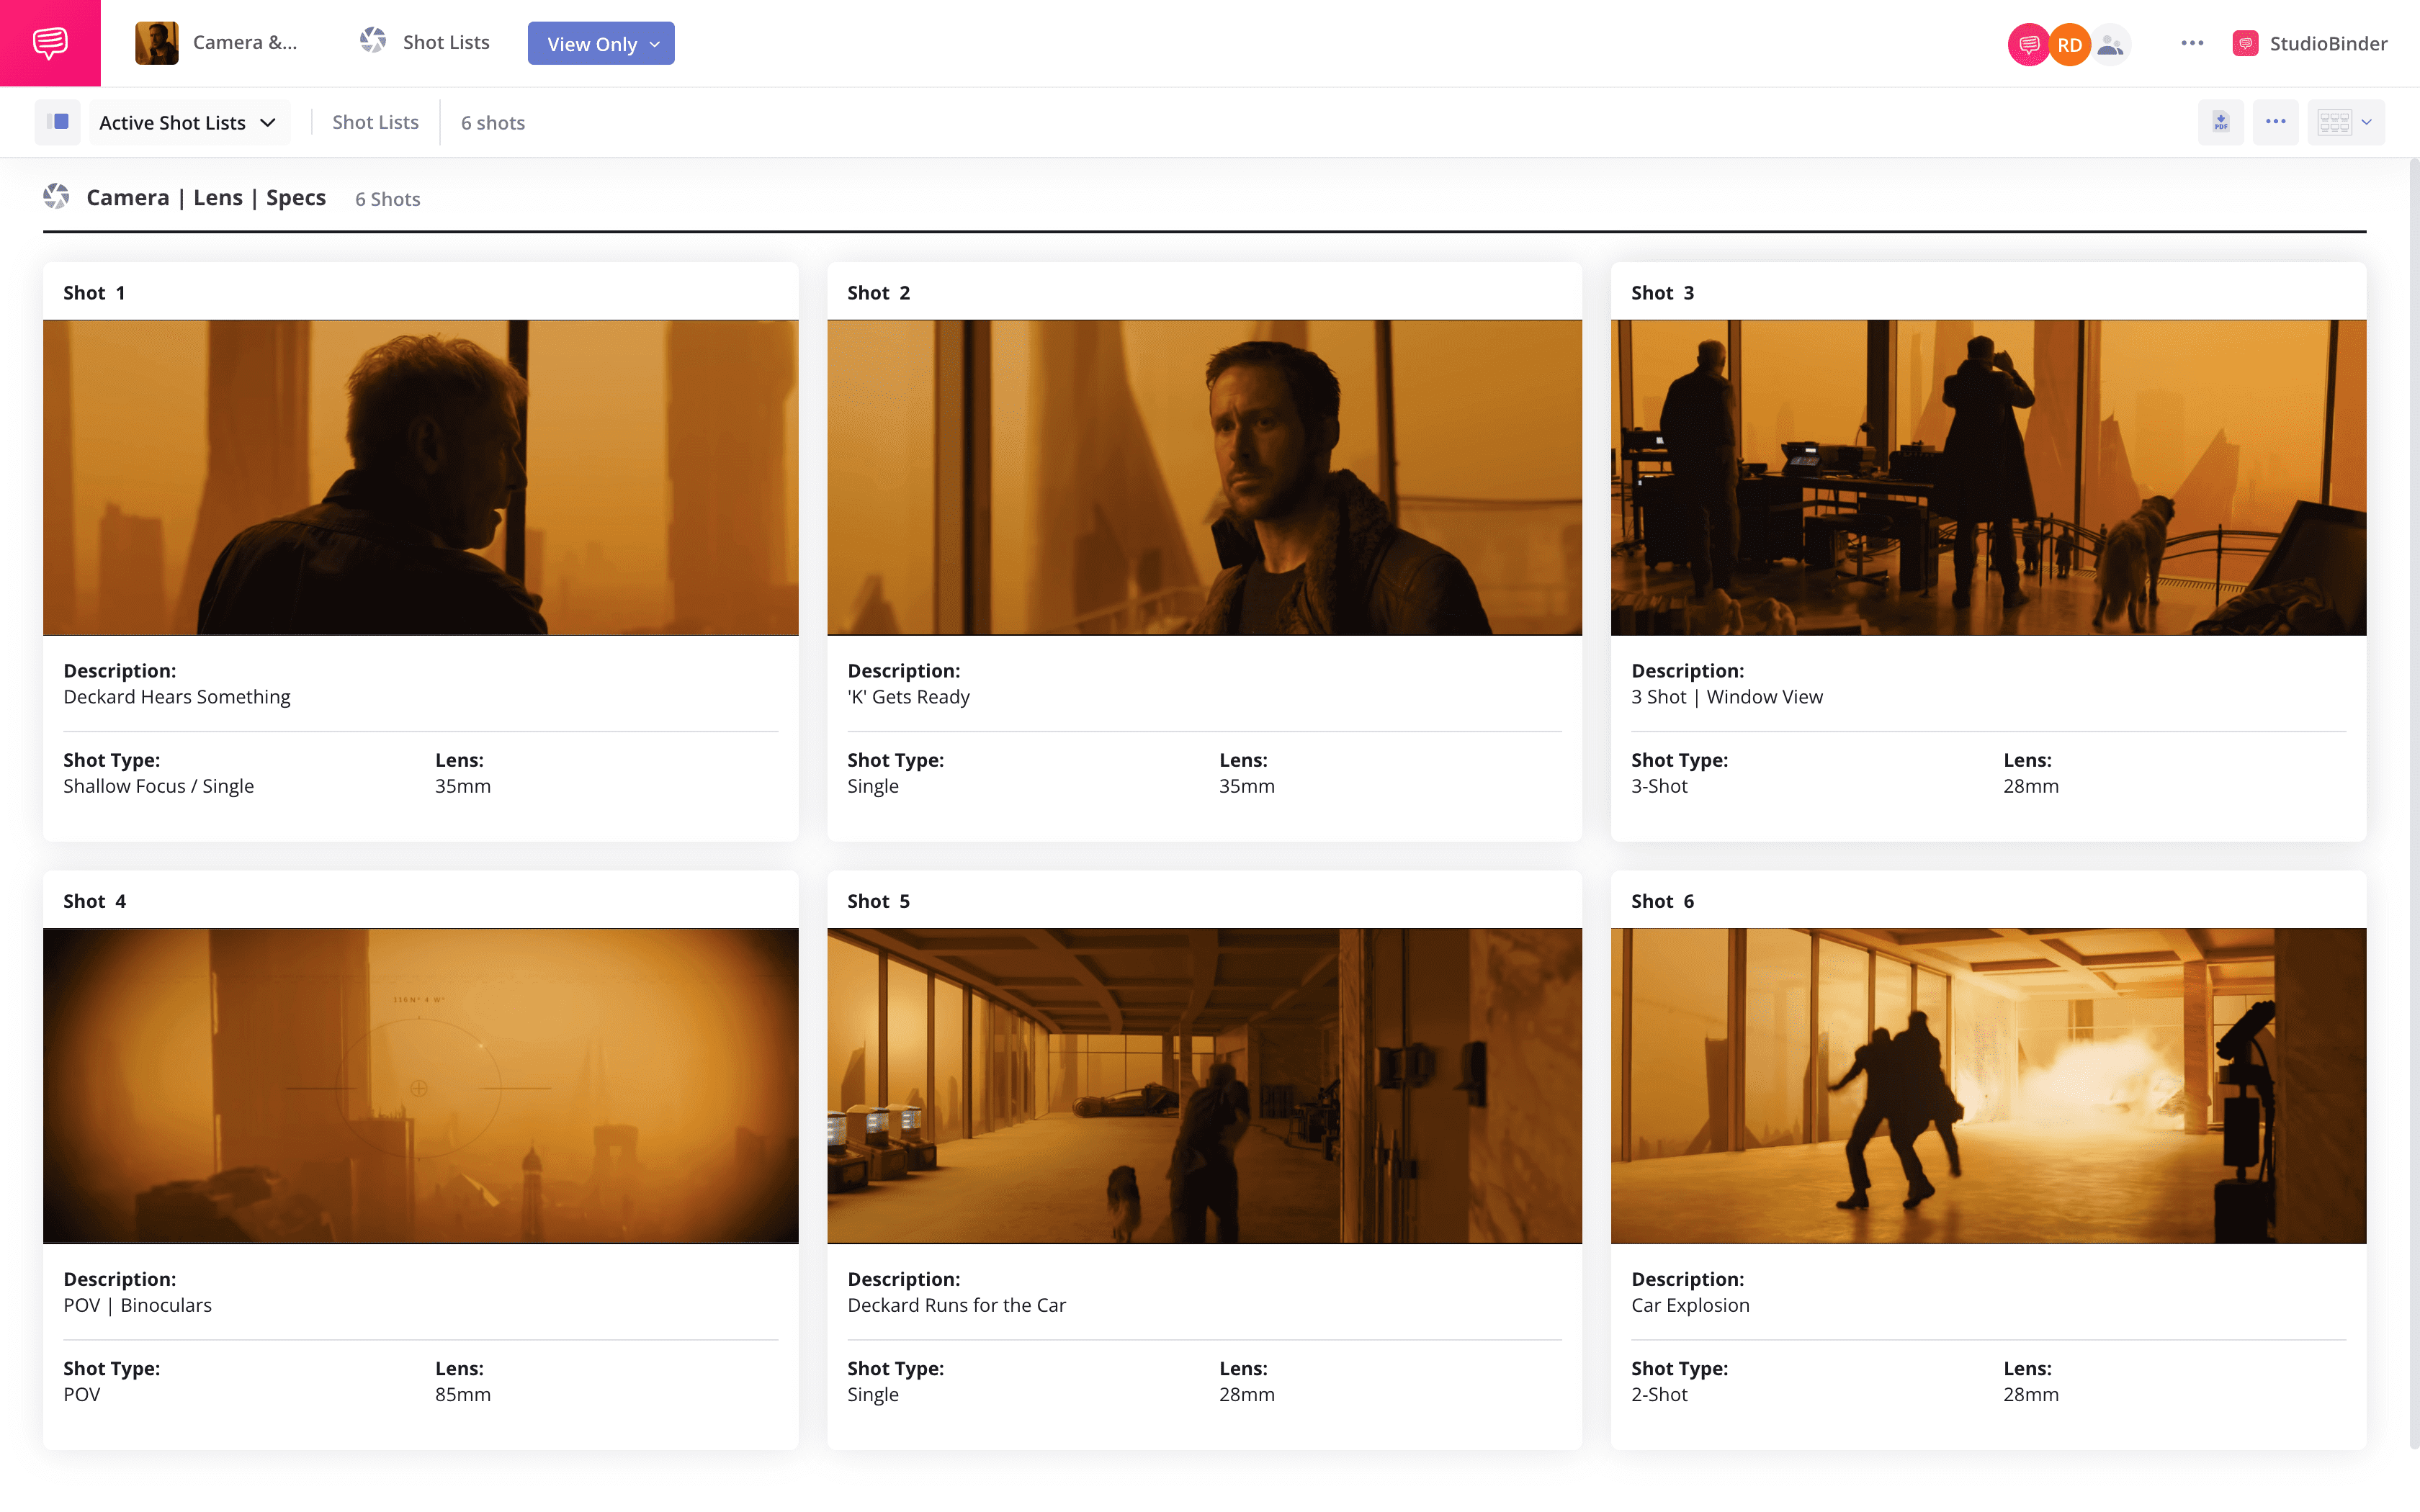 Types of Camera Lenses Blade Runner Shots Example StudioBinder Shot Listing Software